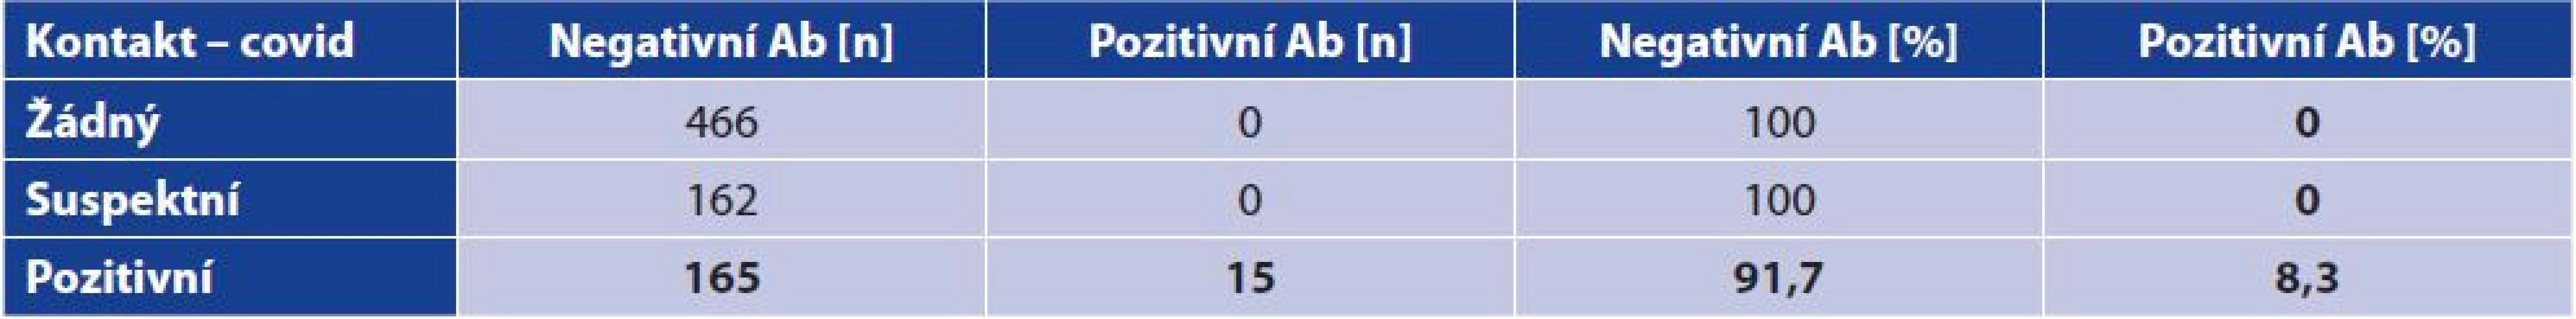 Vliv kontaktu na pozitivitu anti-SARS-CoV-2 protilátek<br>
Table 3. Effect of contact on the positivity for anti-SARS-CoV-2 antibodies